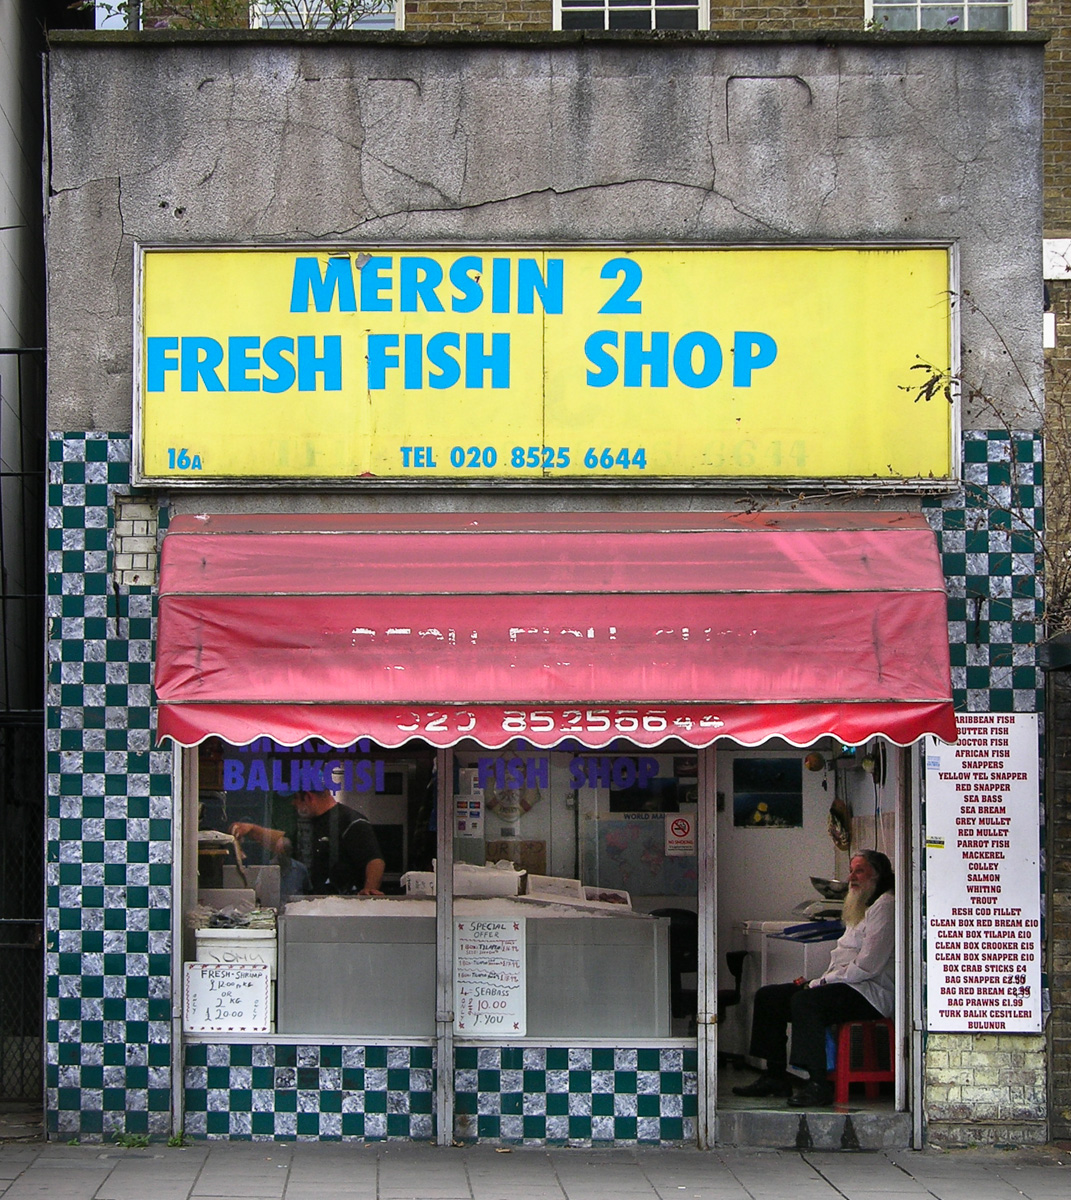 Mersin 2 Fresh Fish Shop Shopfront Elegy